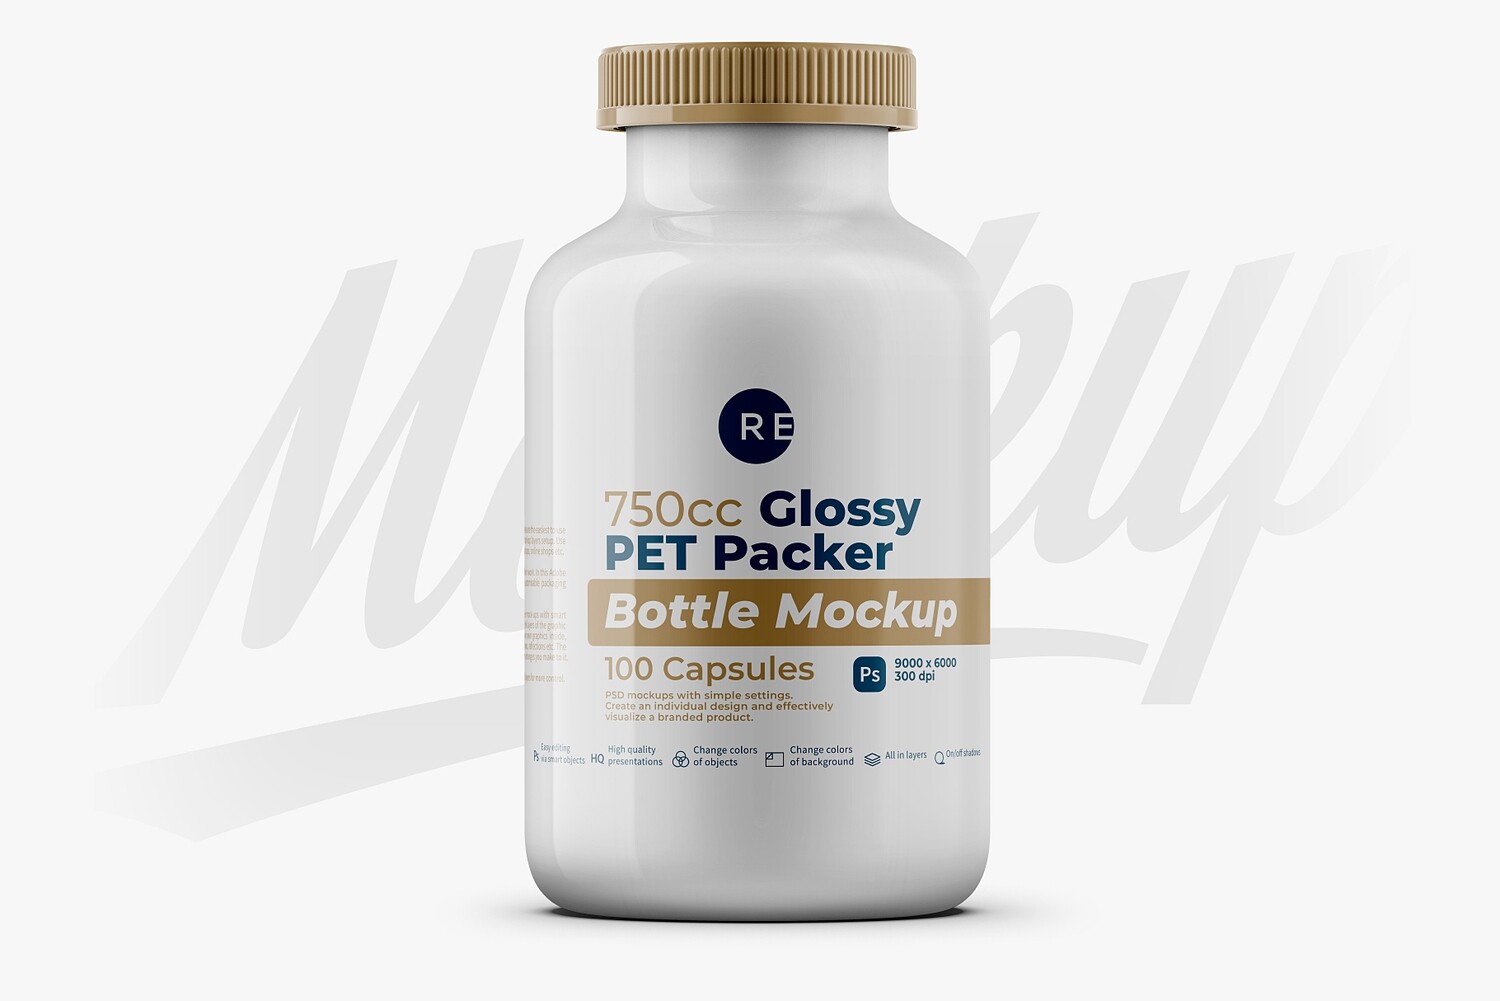 Glossy Pills Bottle Mockup 750cc